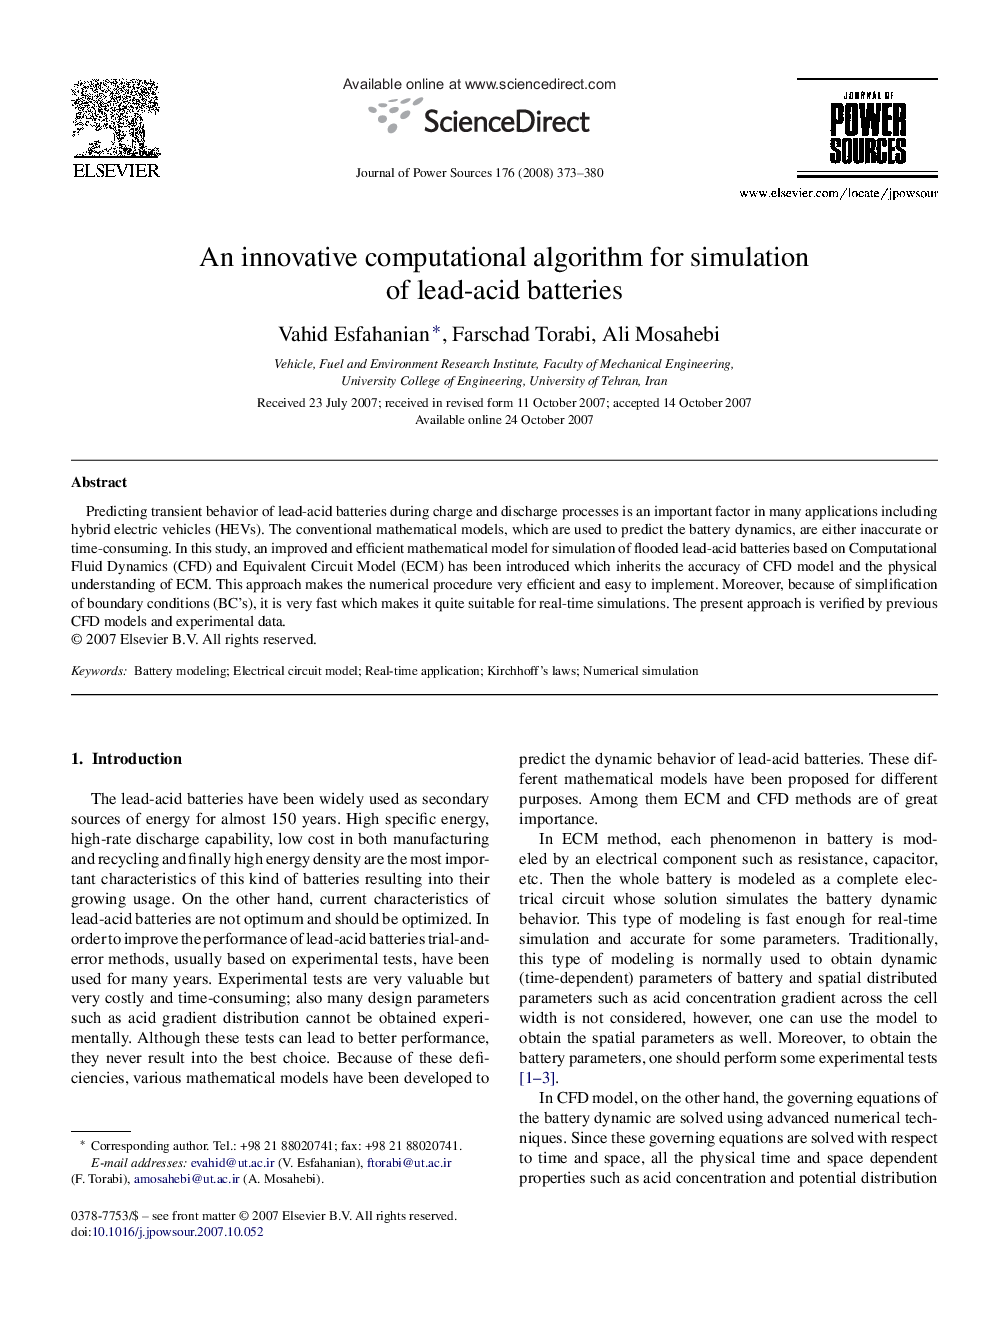 An innovative computational algorithm for simulation of lead-acid batteries